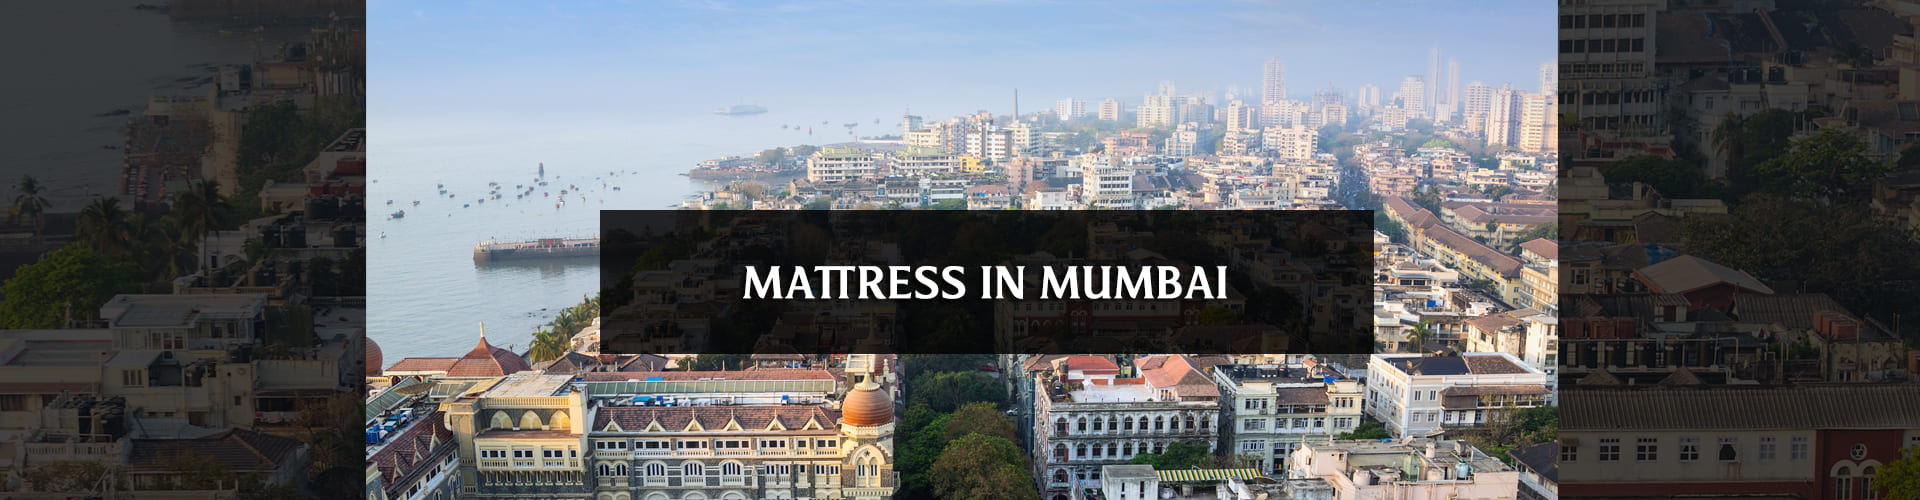 Buy mattress online in mumbai